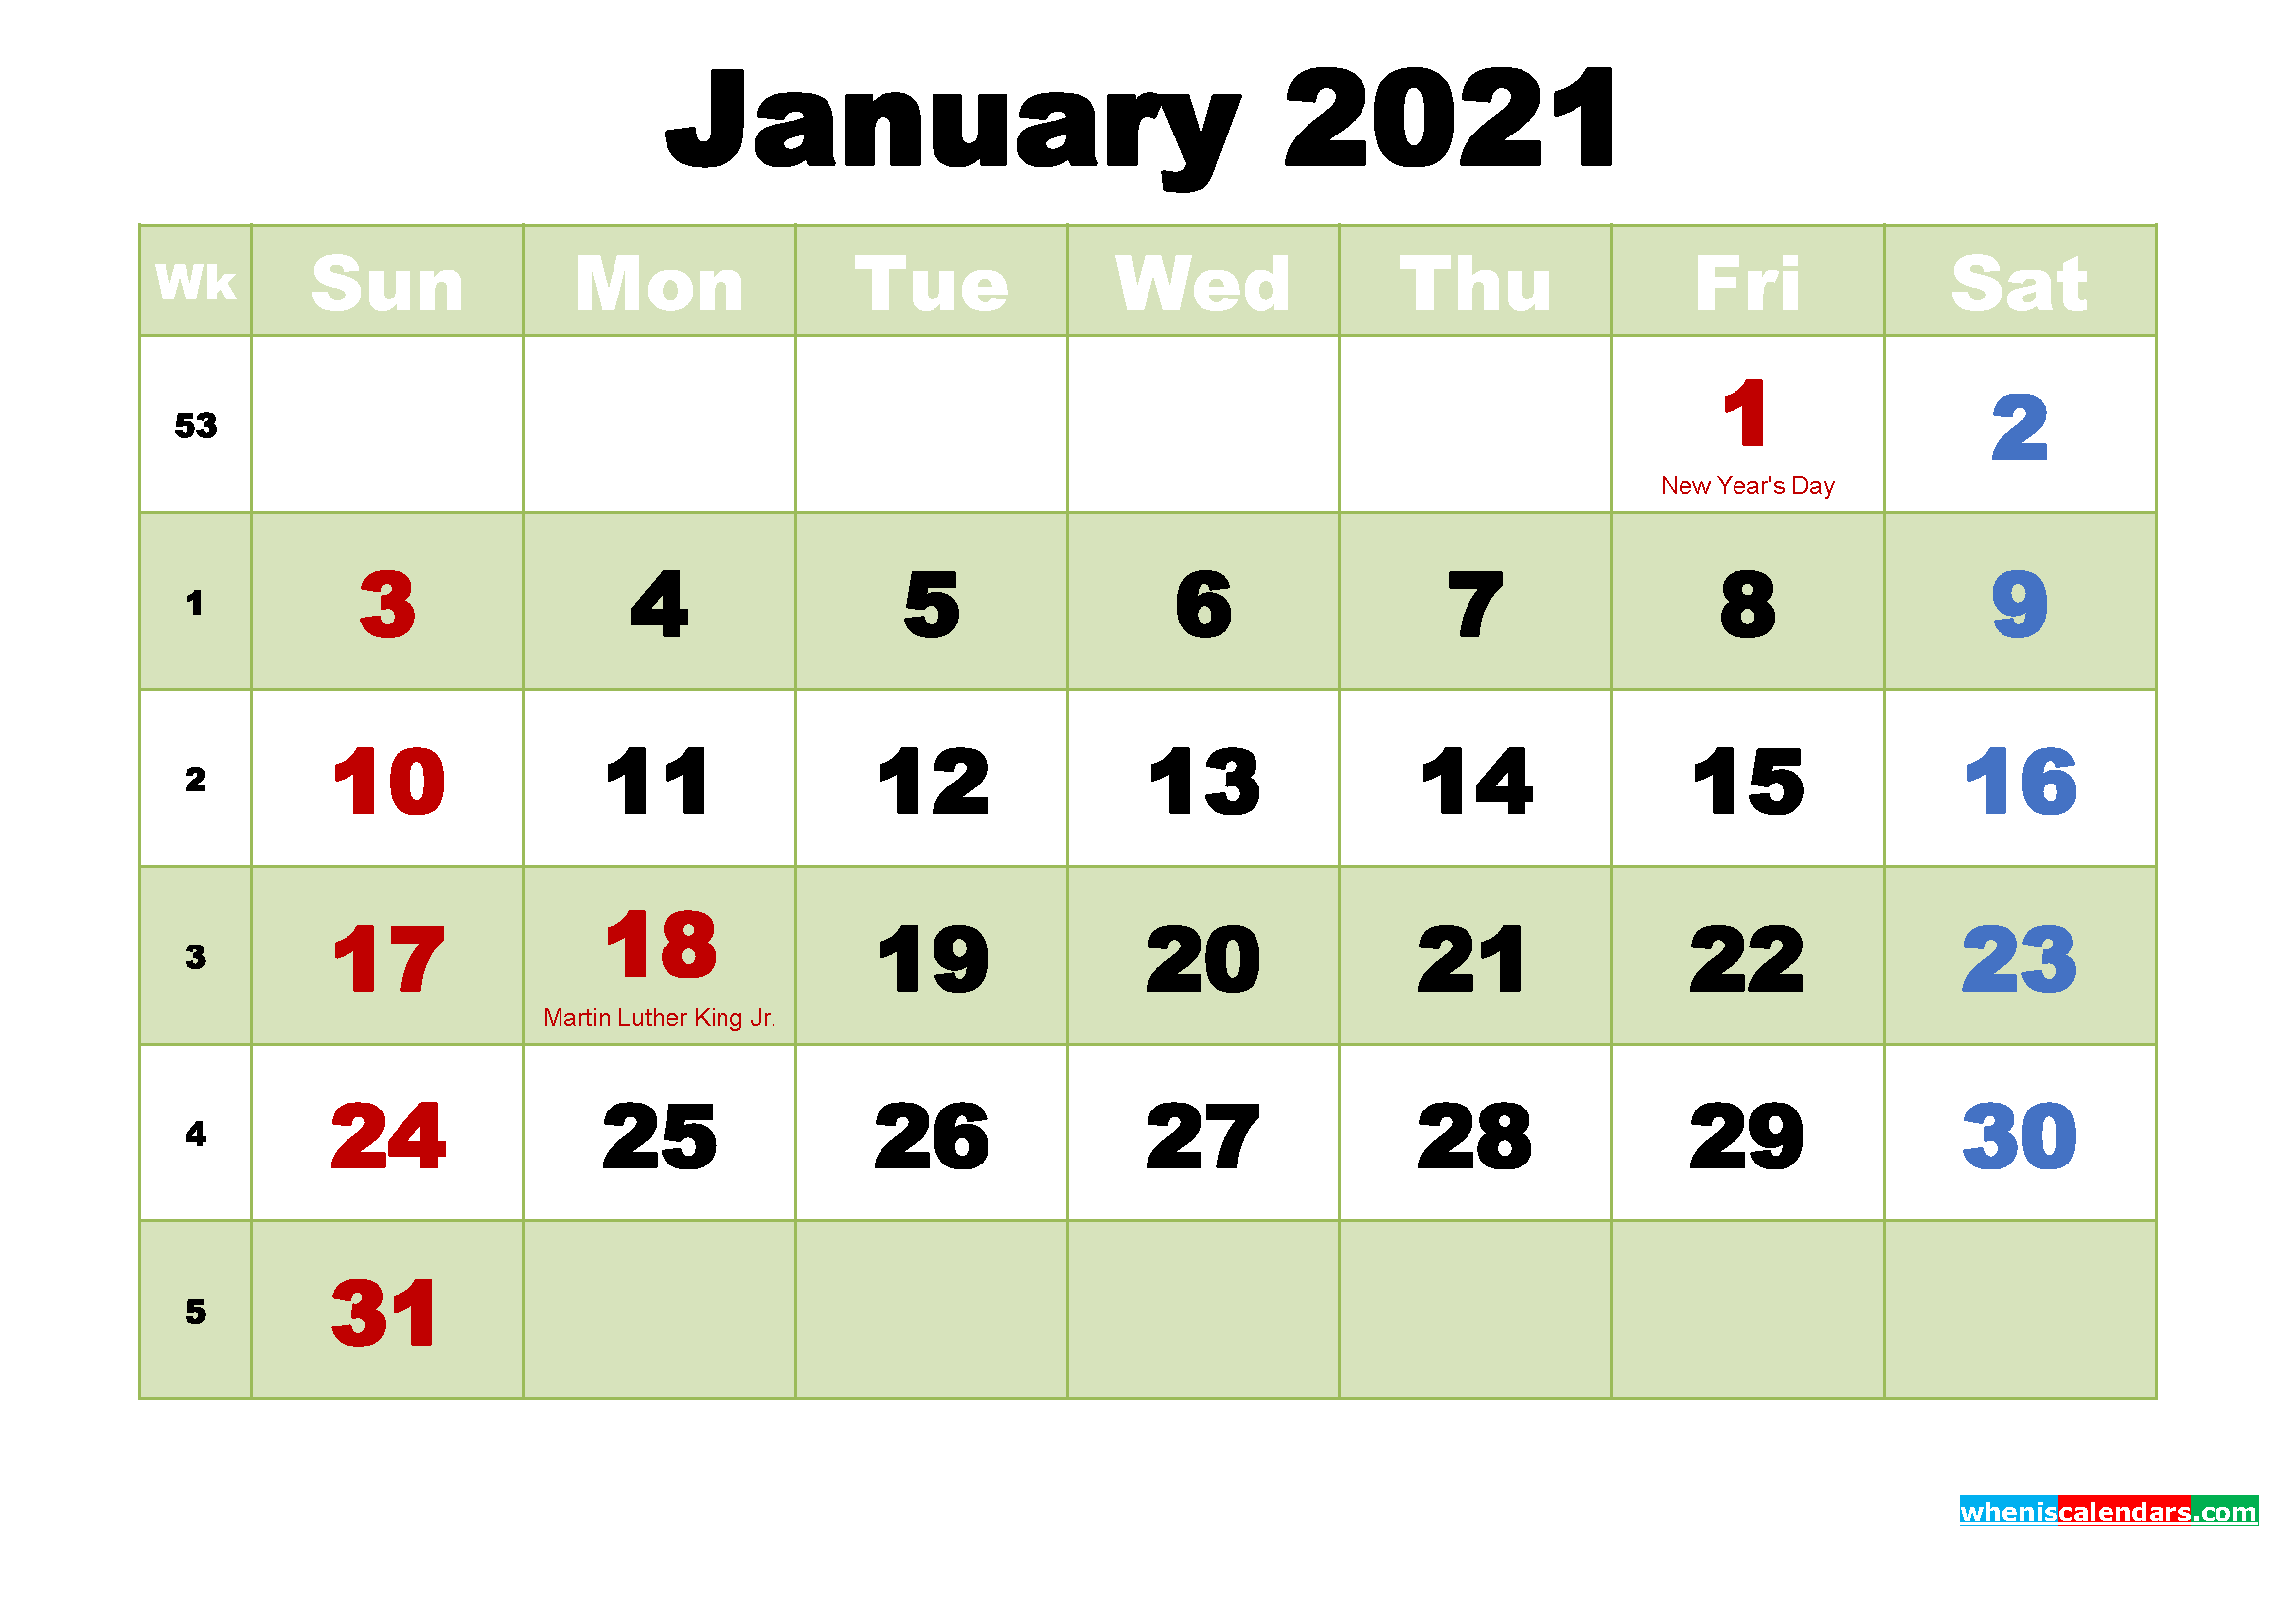 January 2021 Calendar Wallpaper Hd Image ID 8